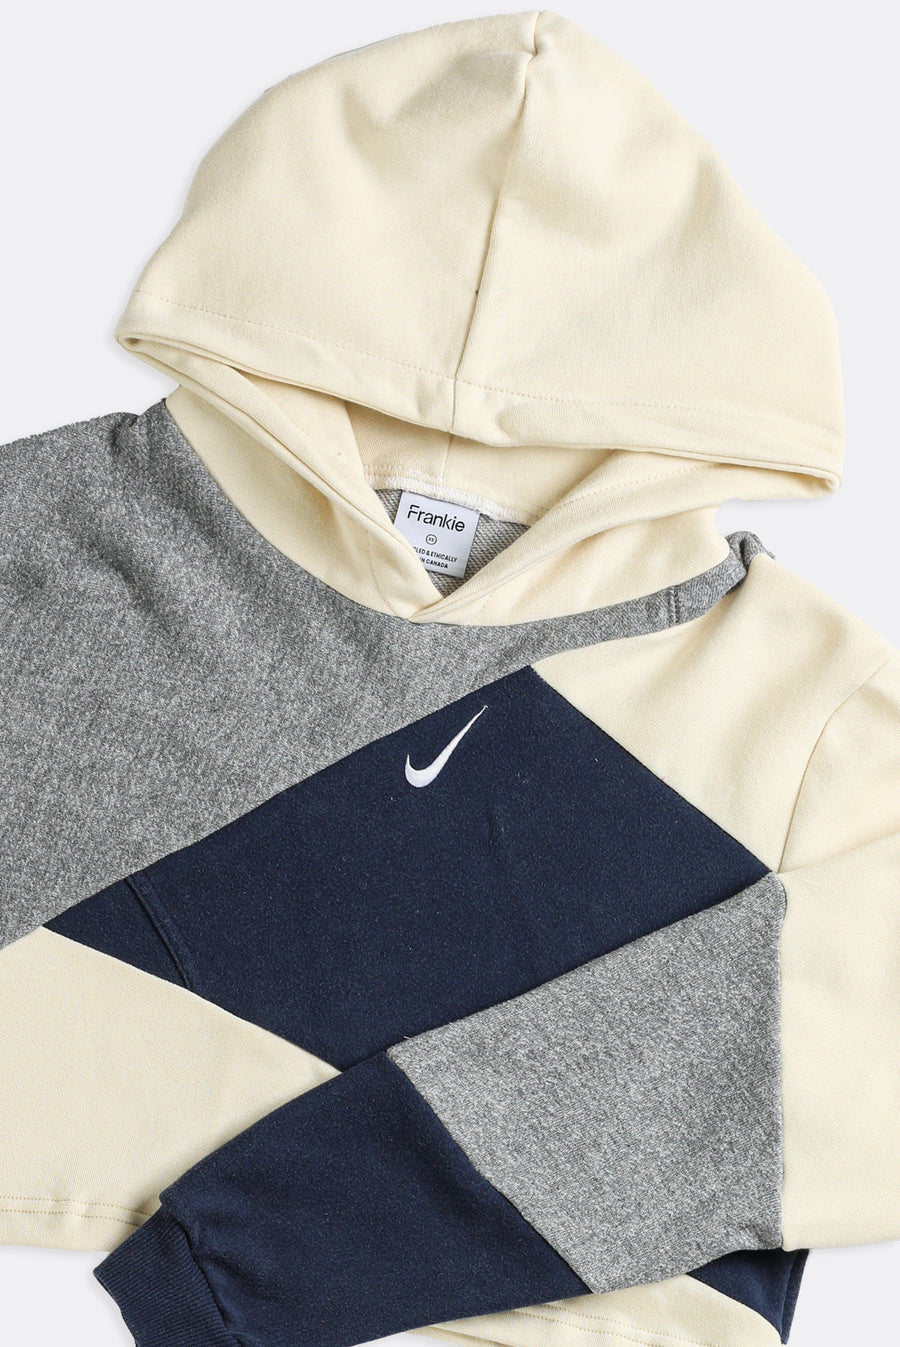 Rework Nike Patchwork Crop Sweatshirt - XS